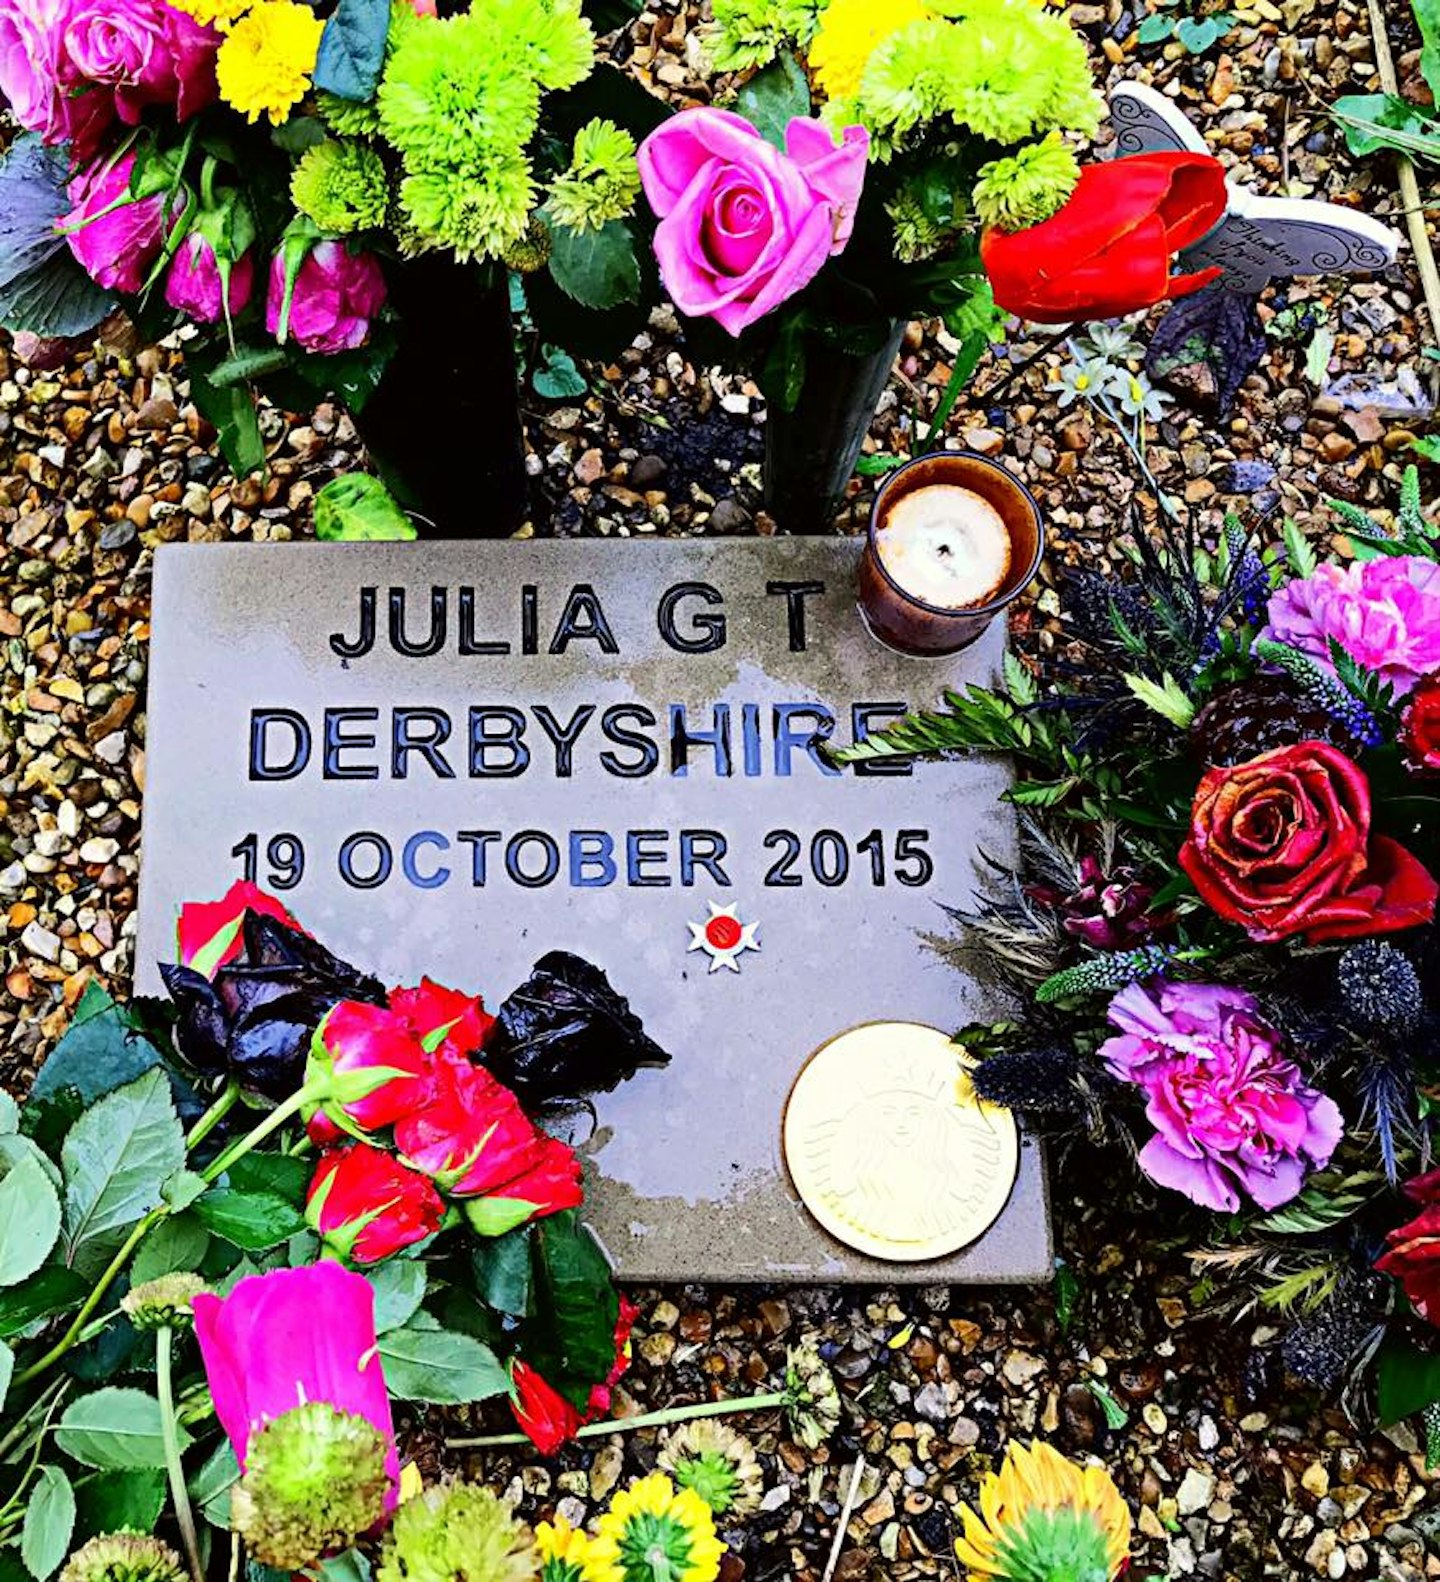 adrian-derbyshire-daughter-julia-death-suicide-attempt-online-bullying